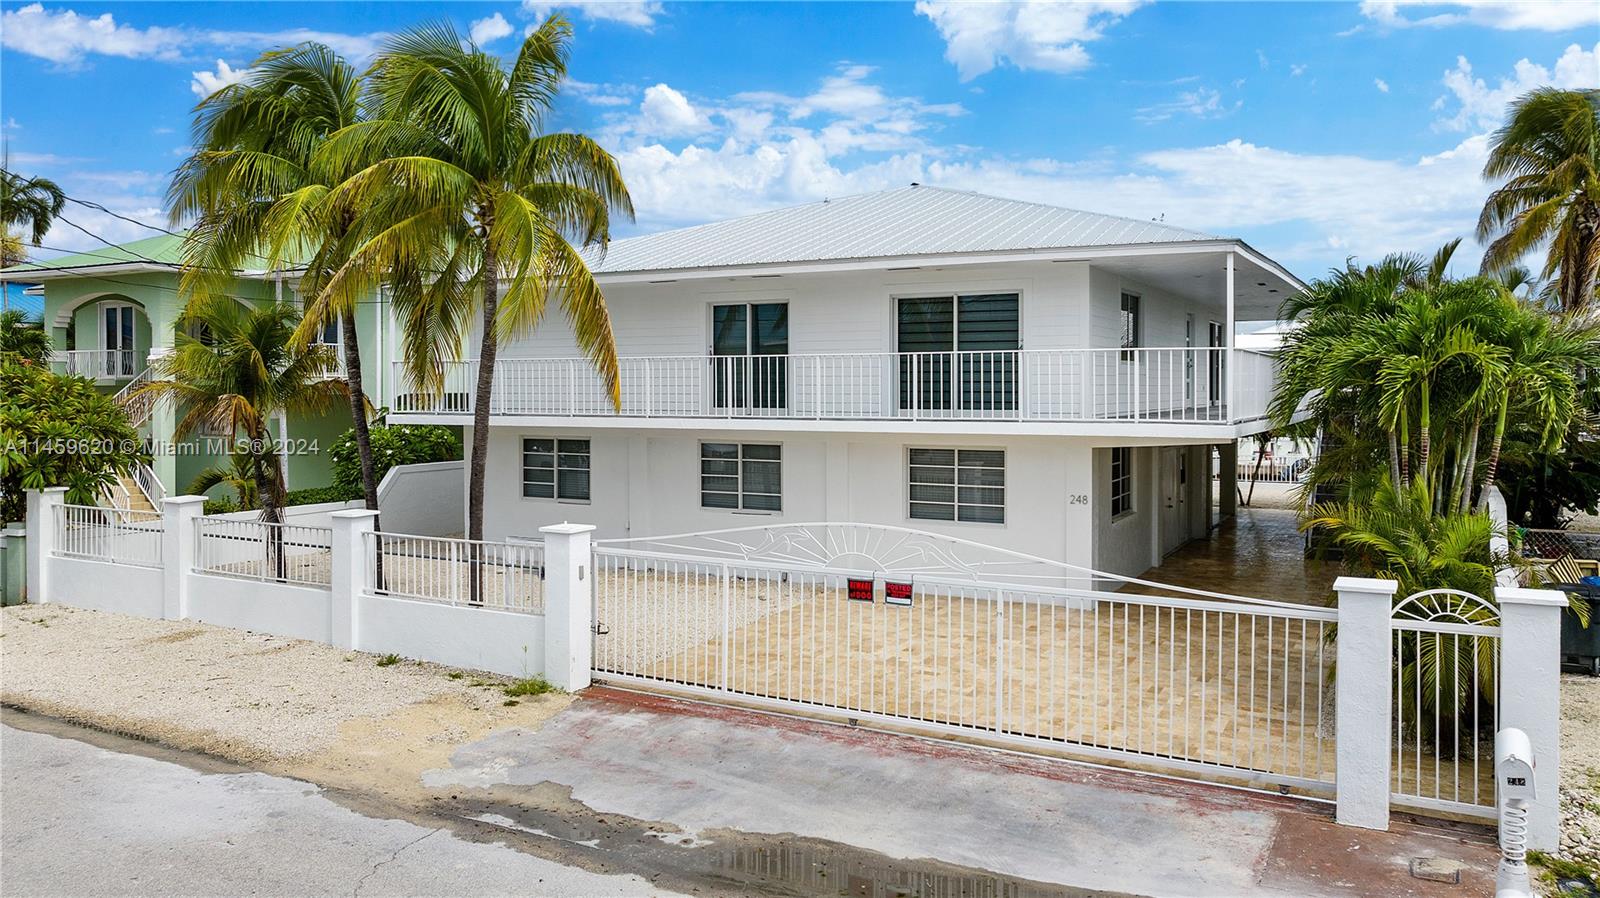 Property for Sale at 248 Atlantic Blvd Blvd, Key Largo, Monroe County, Florida - Bedrooms: 3 
Bathrooms: 2  - $2,799,999